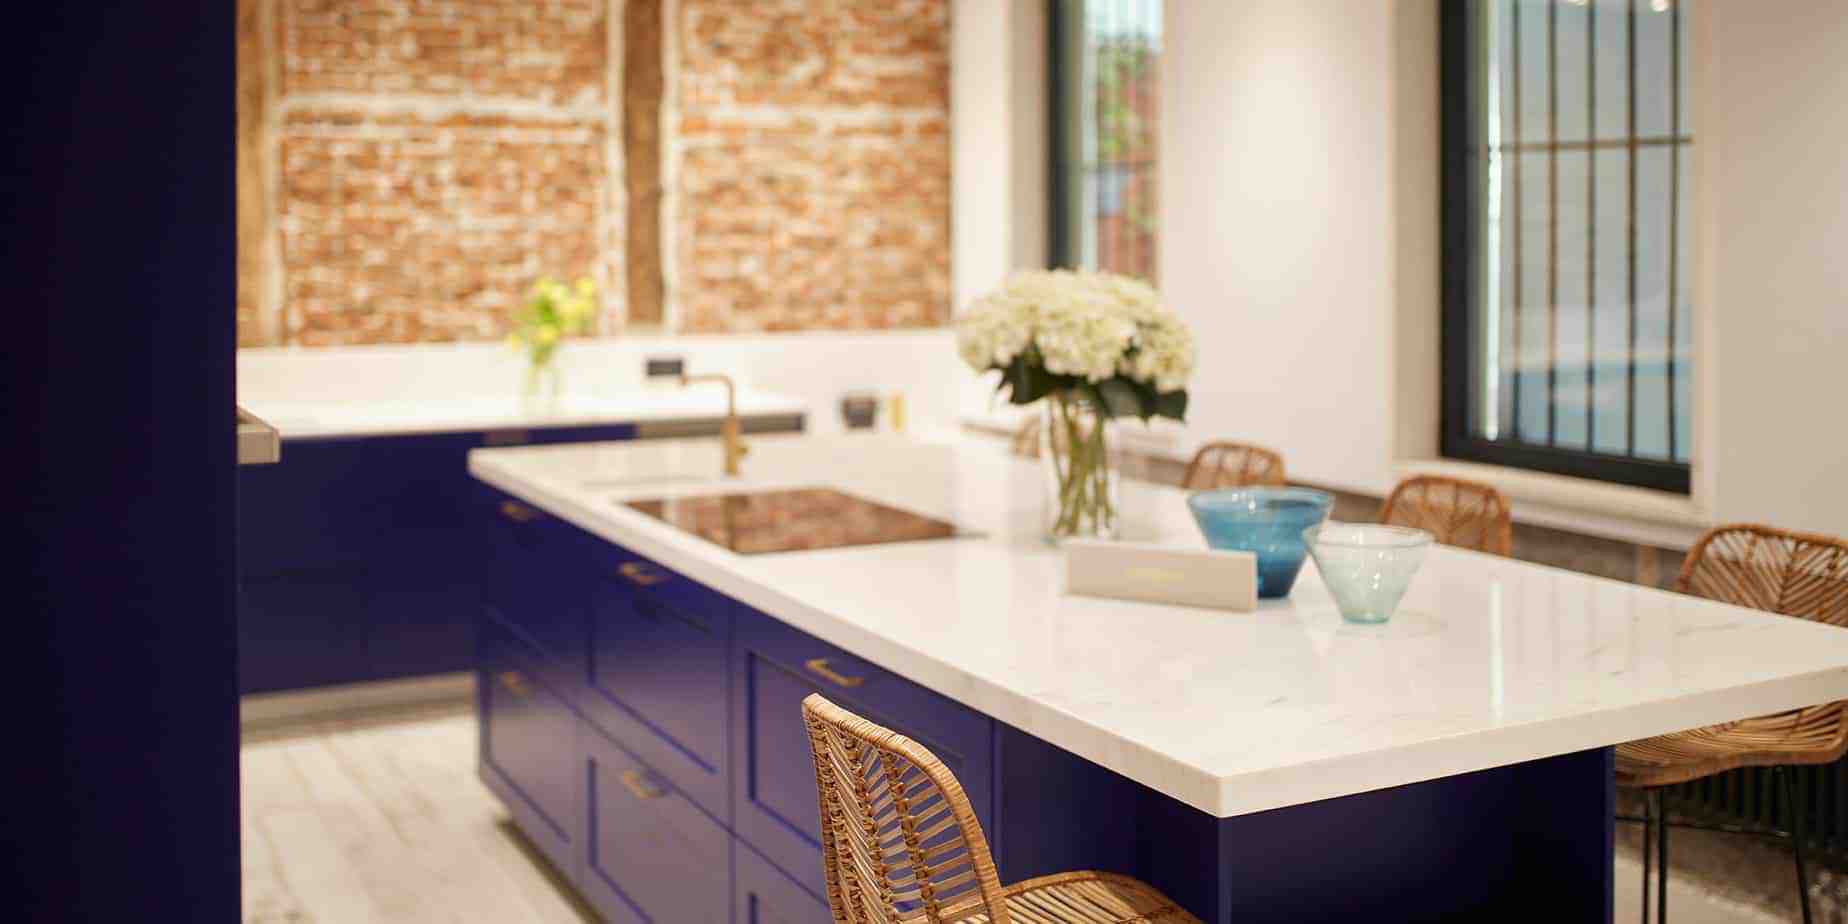 Stylish kitchen with exposed brick walls